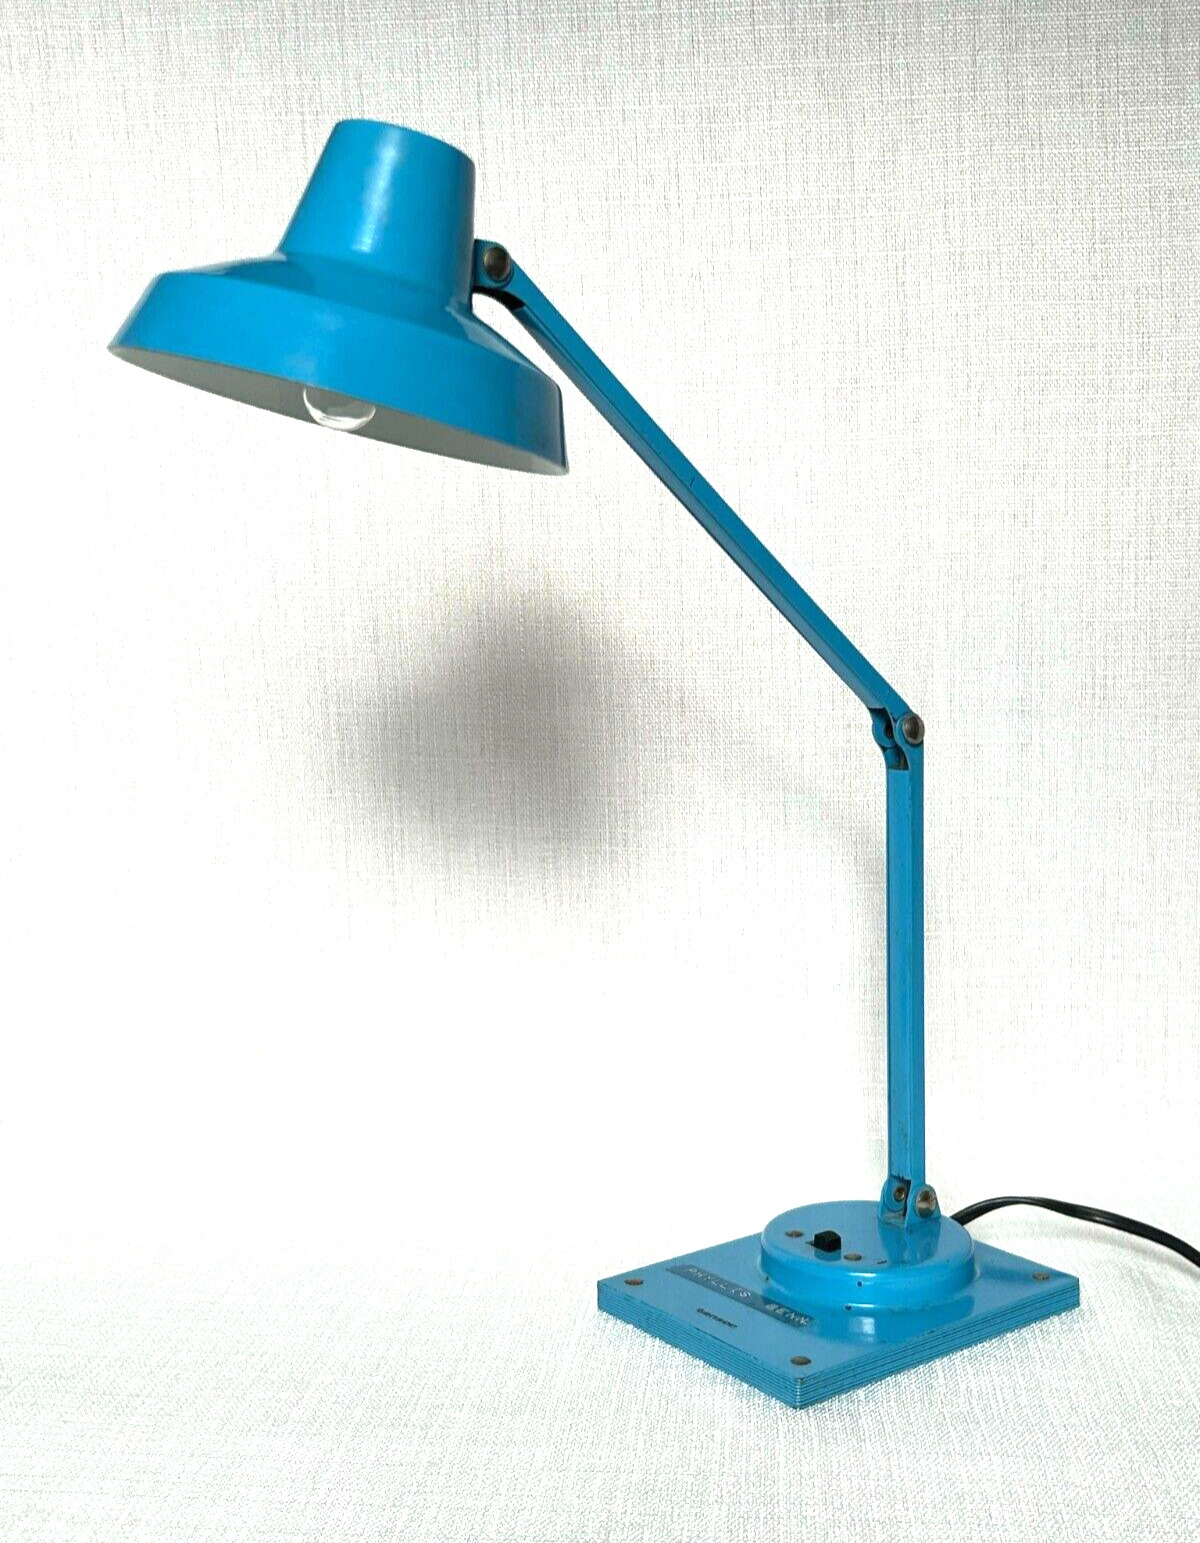 MCM TENSOR IL400 JAY MONROE 1960 ARTICULATING DESK ADJUSTABLE LAMP IN BLUE